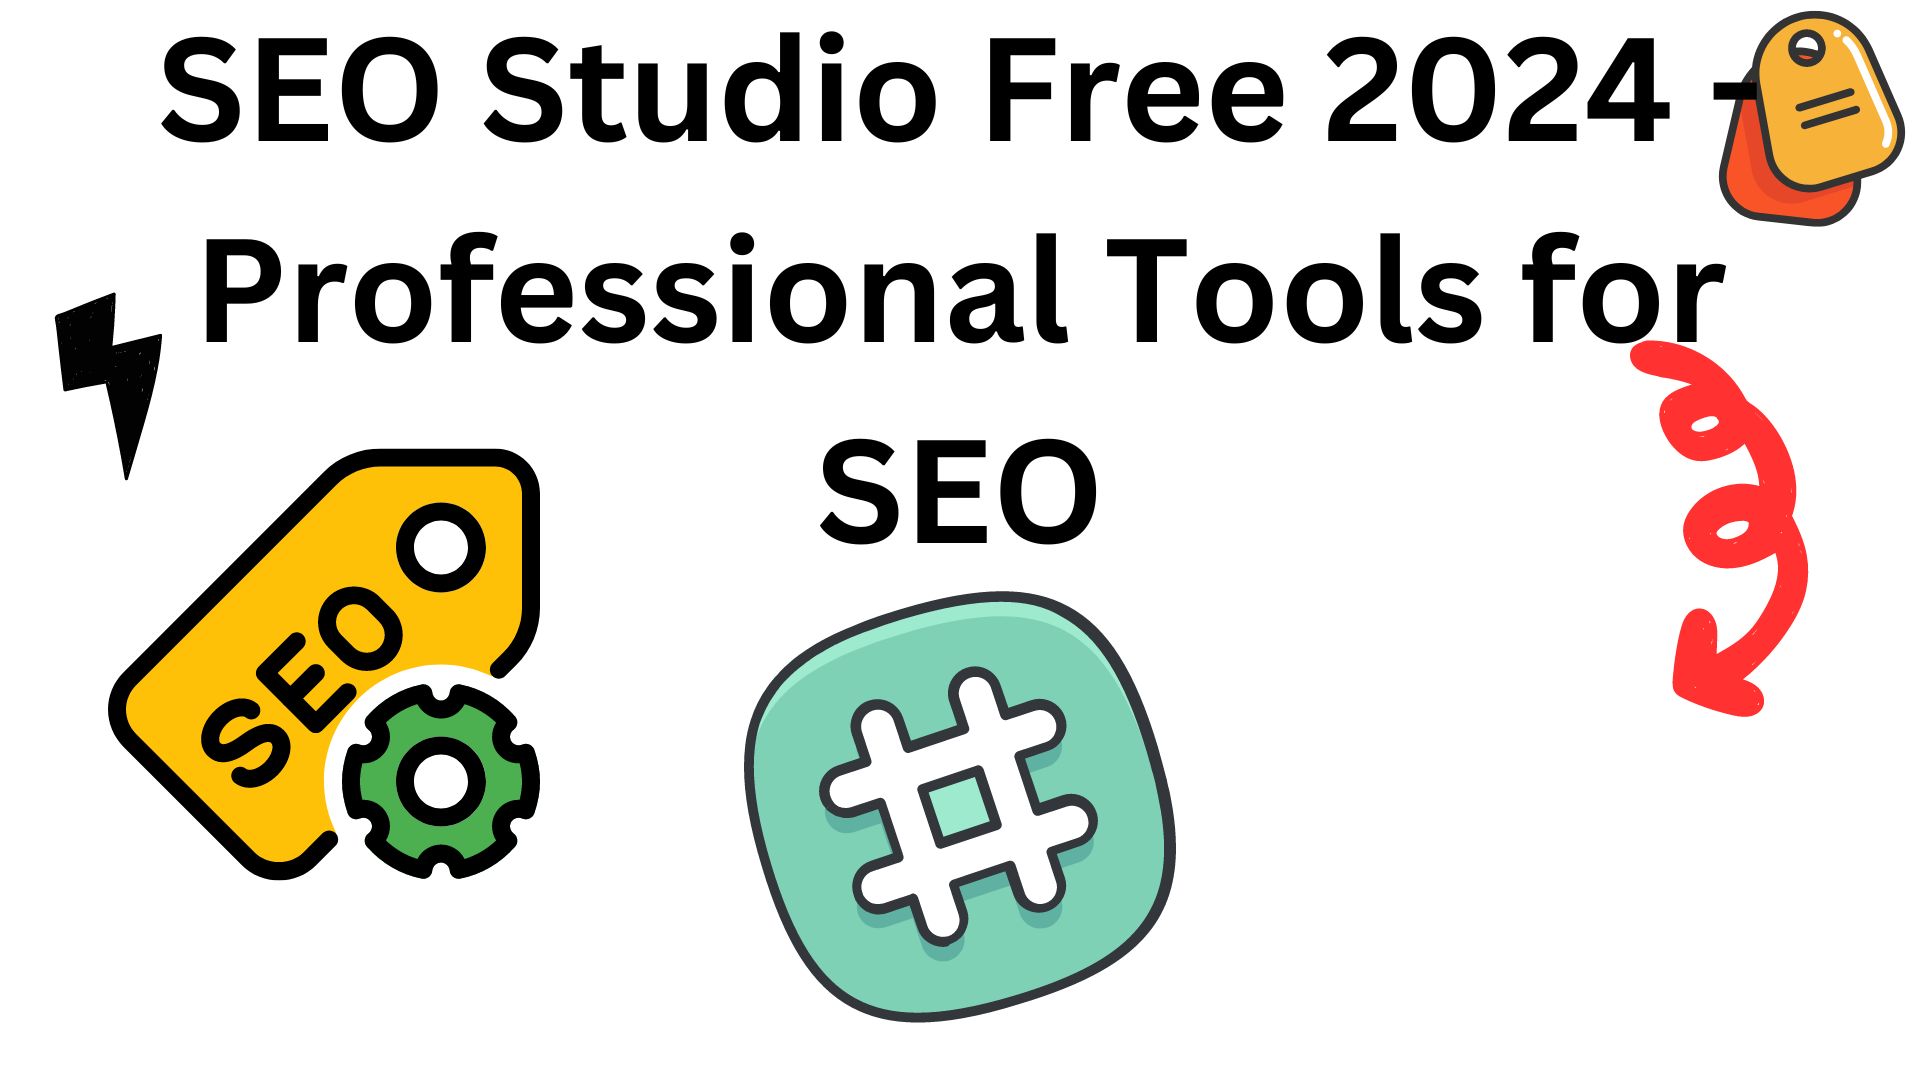 Seo Studio Free 2024 - Professional Tools For Seo